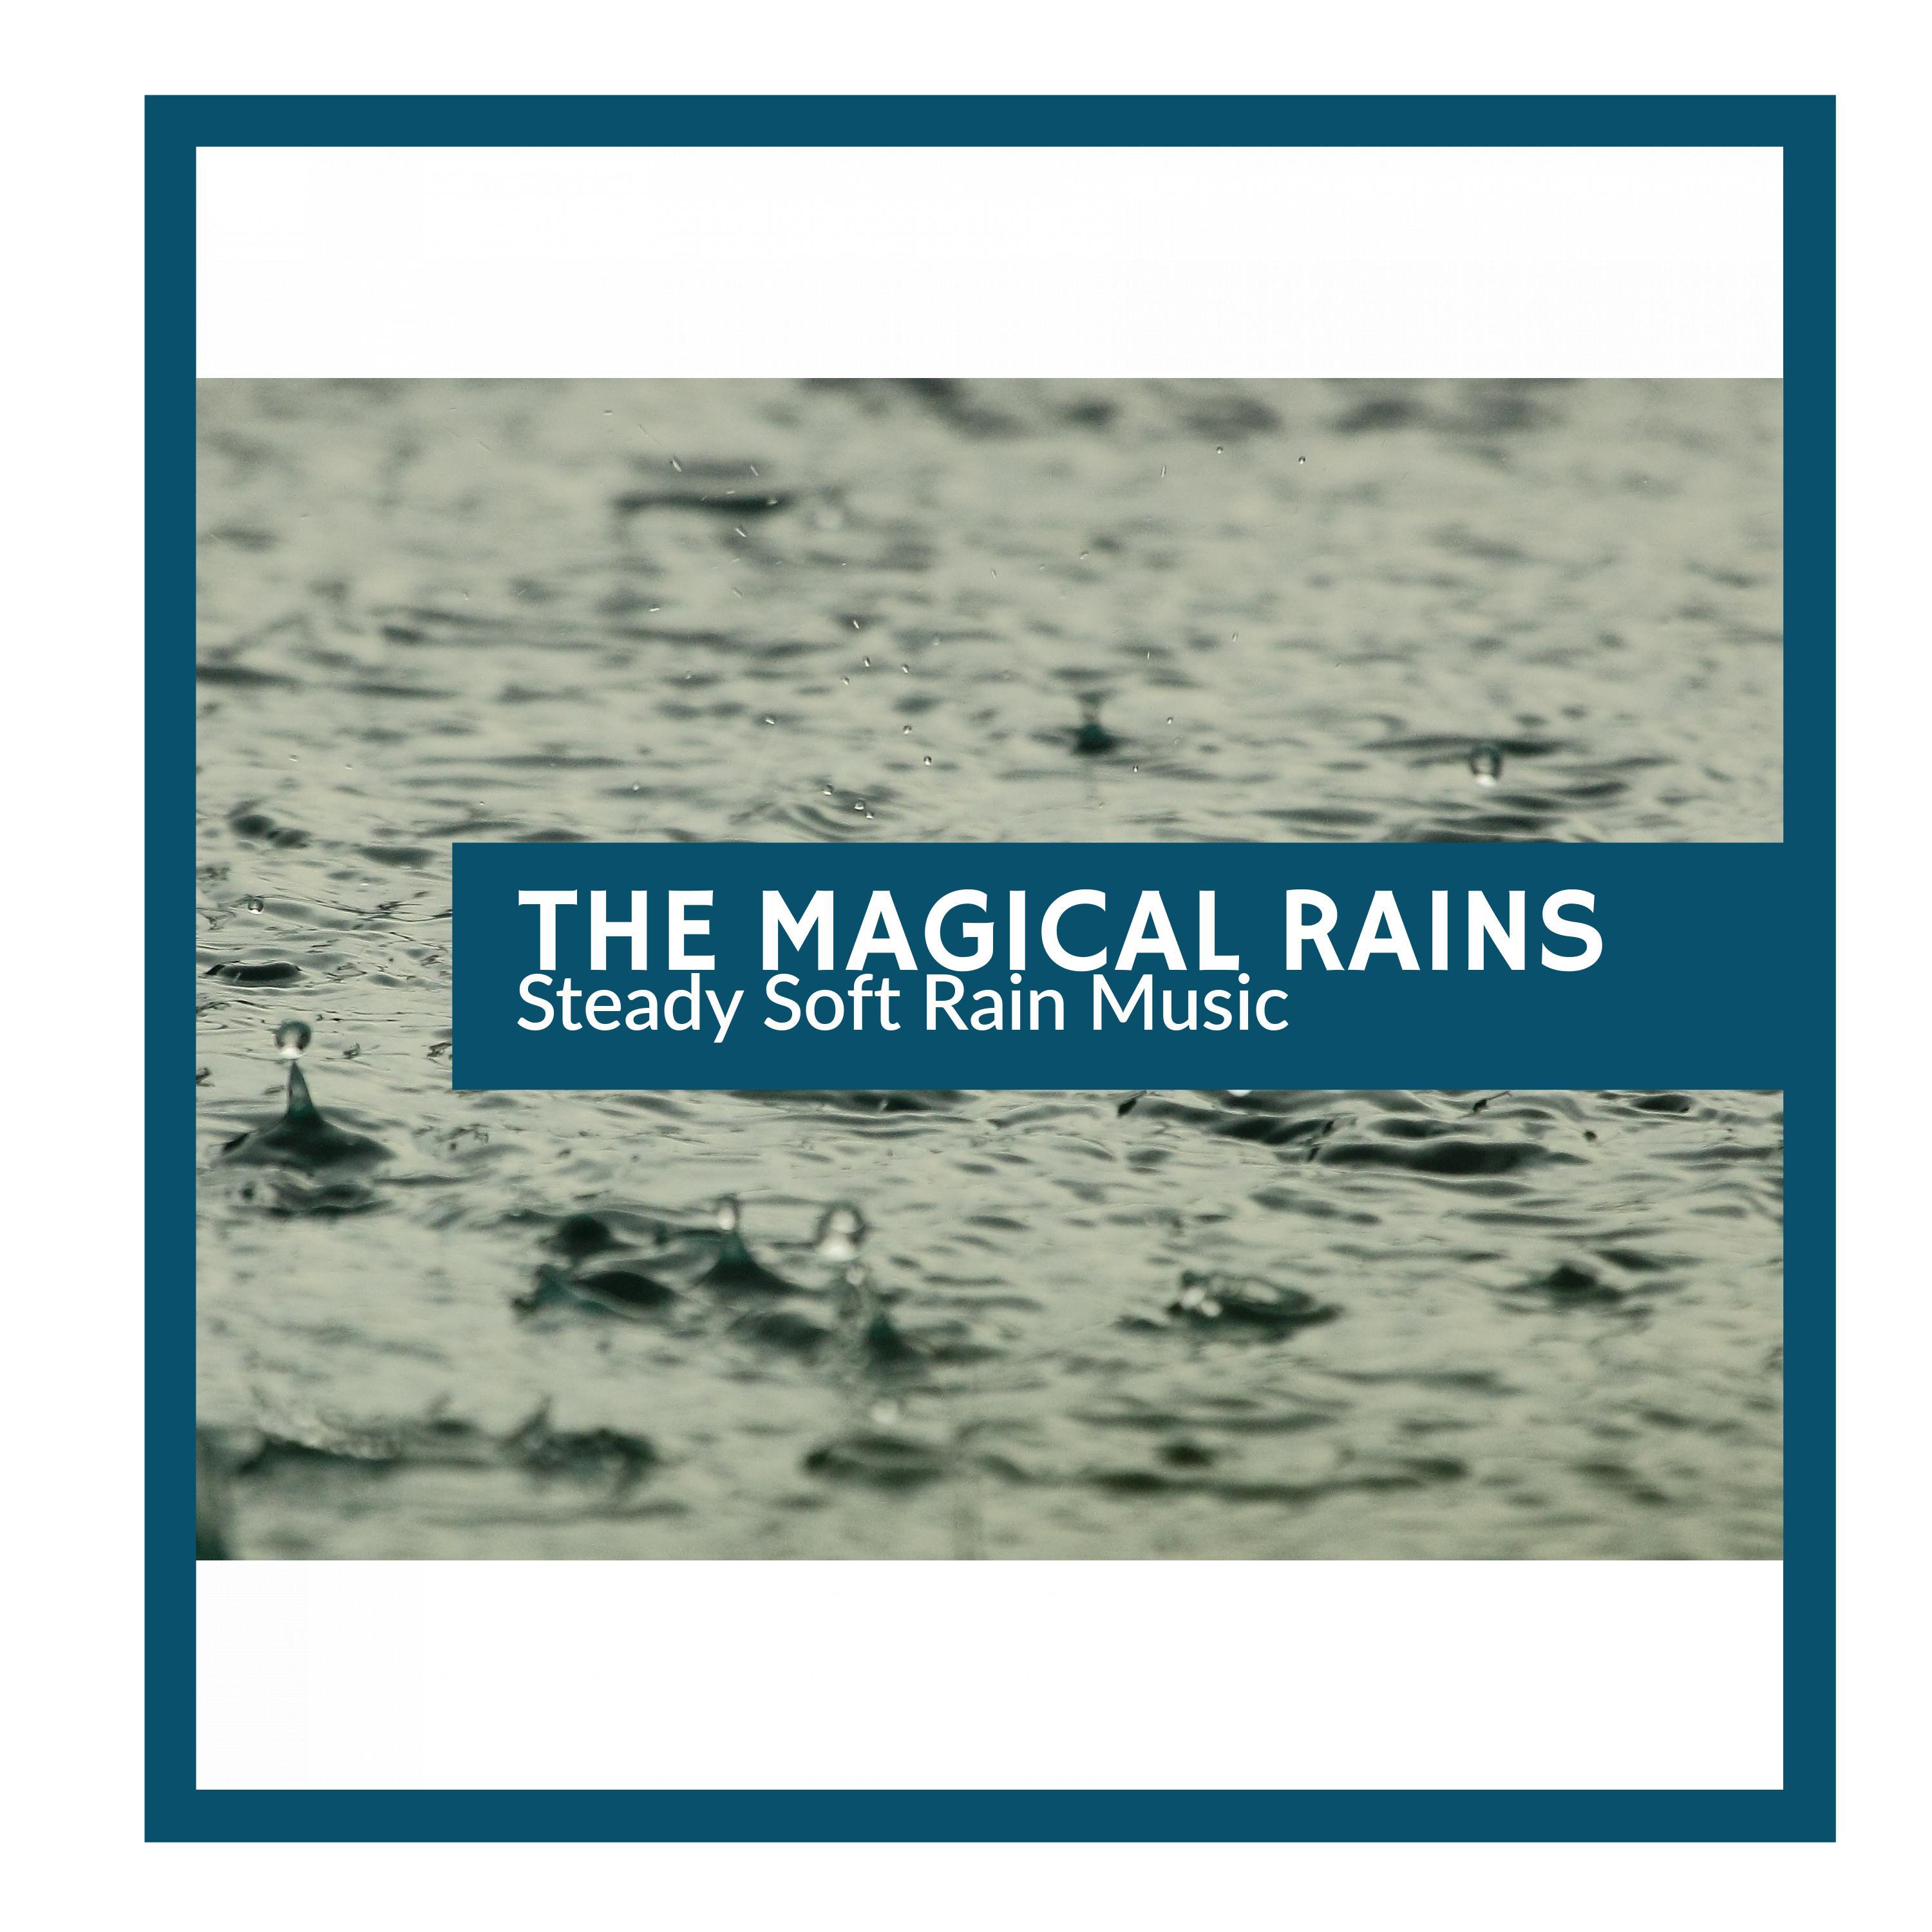 Rain Brainwave sound Project - Soft Heavy Rain